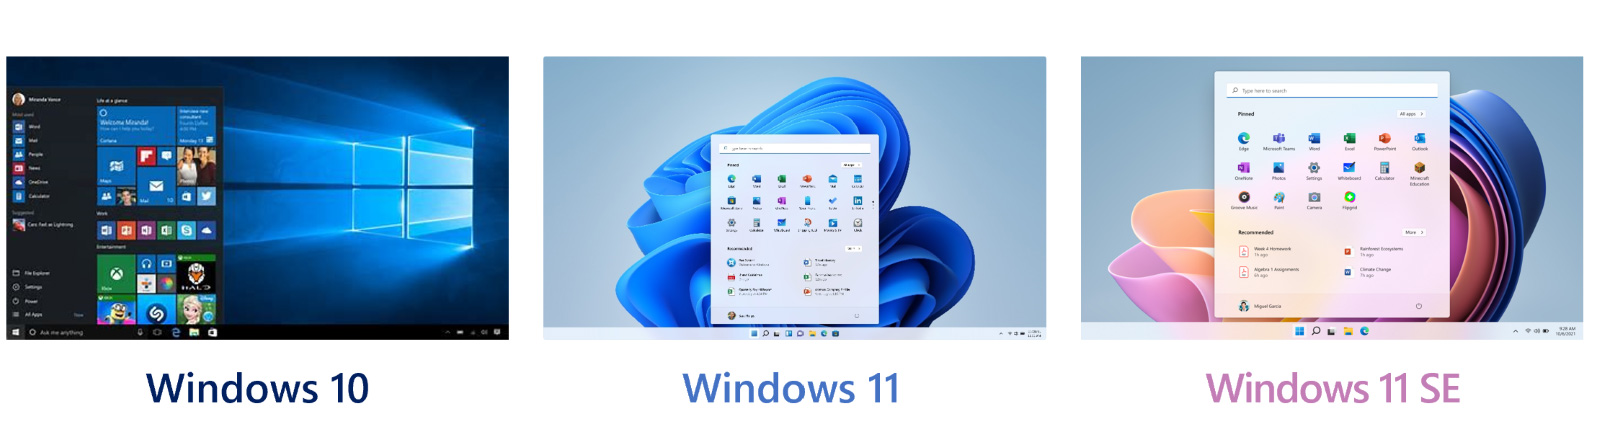 Windows 11 liberez le pouvoir